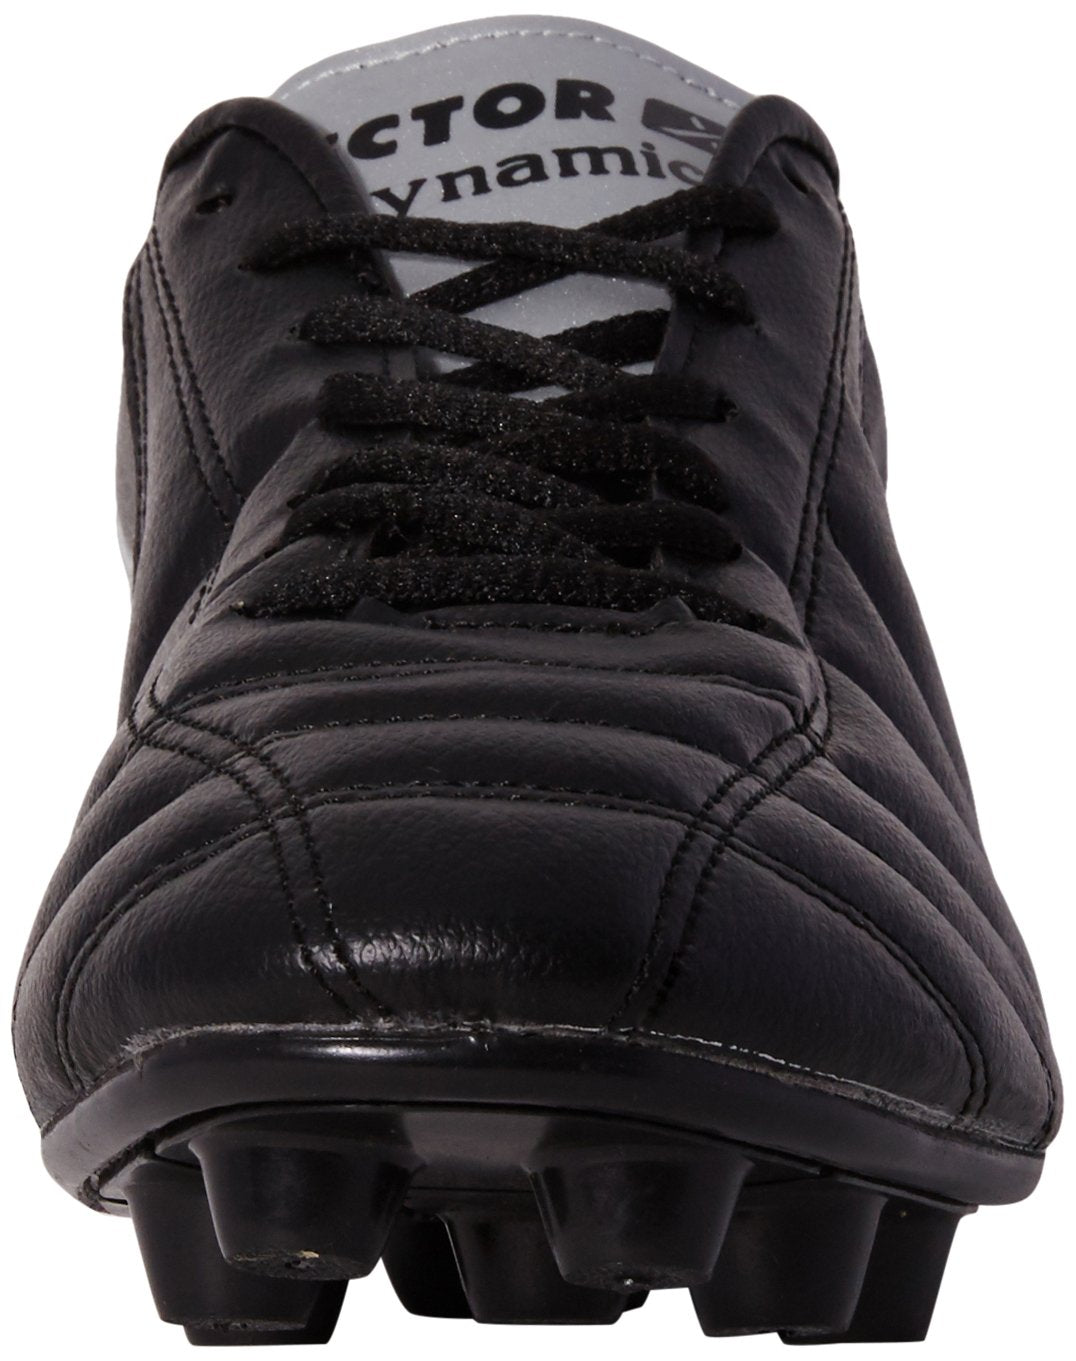 Vector X Dynamic Football Shoes (Black/Silver) - Best Price online Prokicksports.com